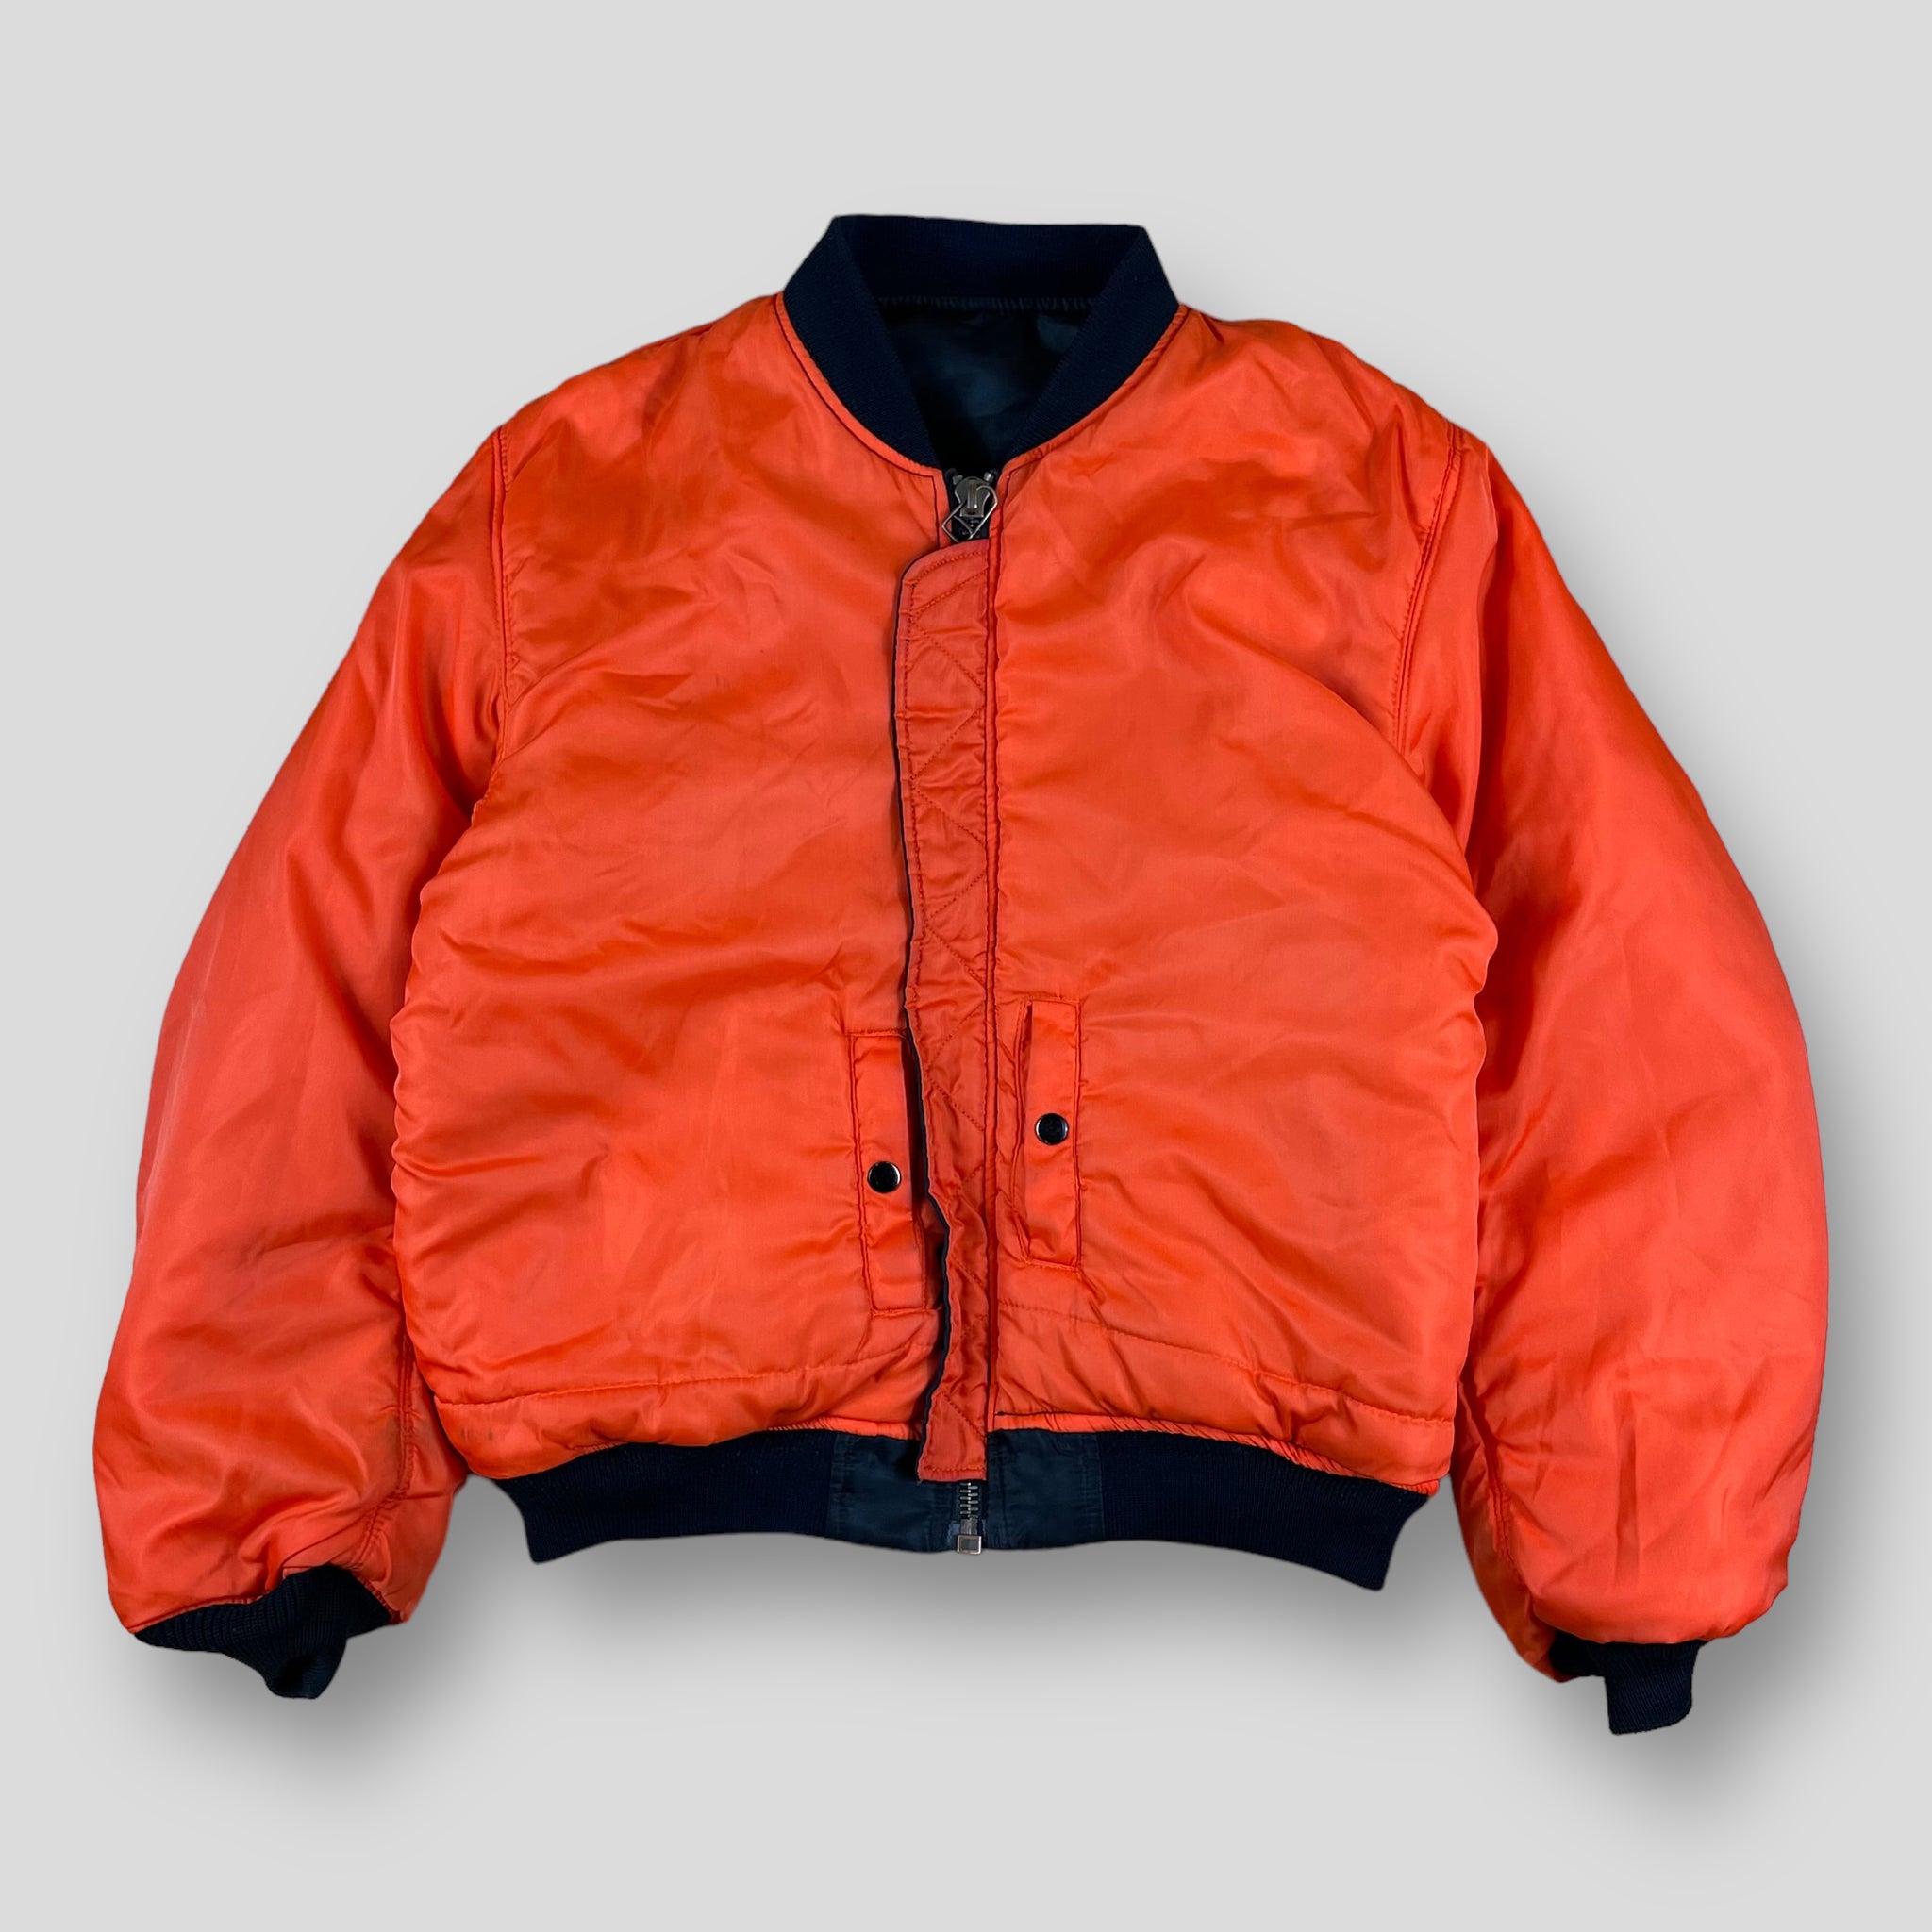 Vintage reversible bomber jacket no